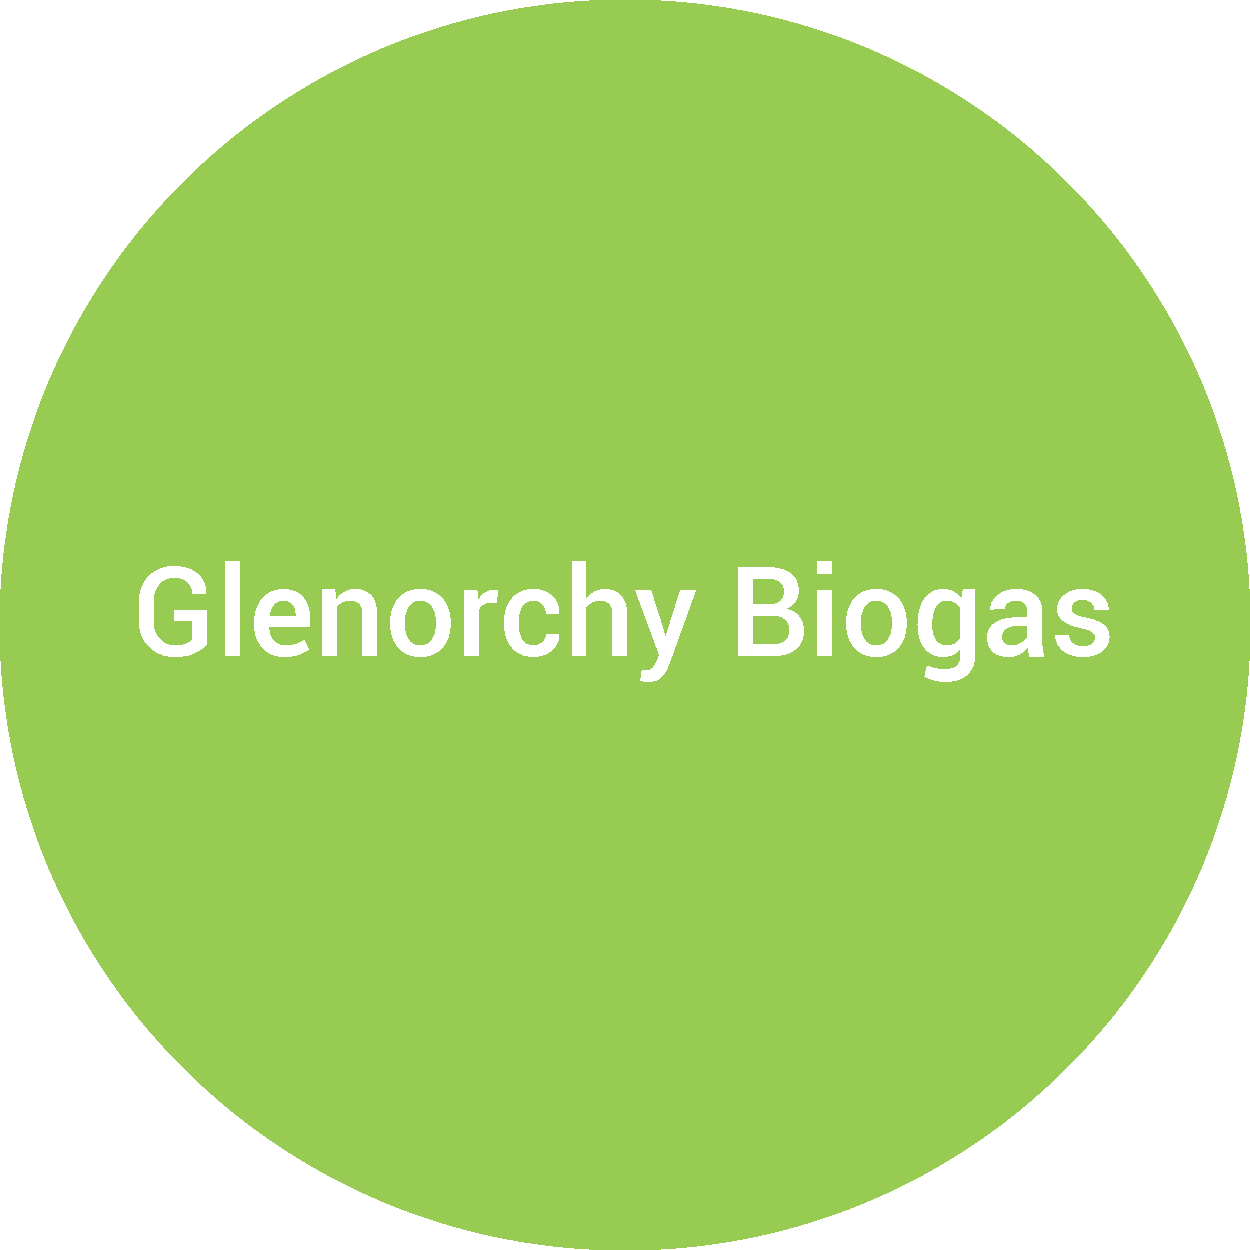 Glenorchy Biogas